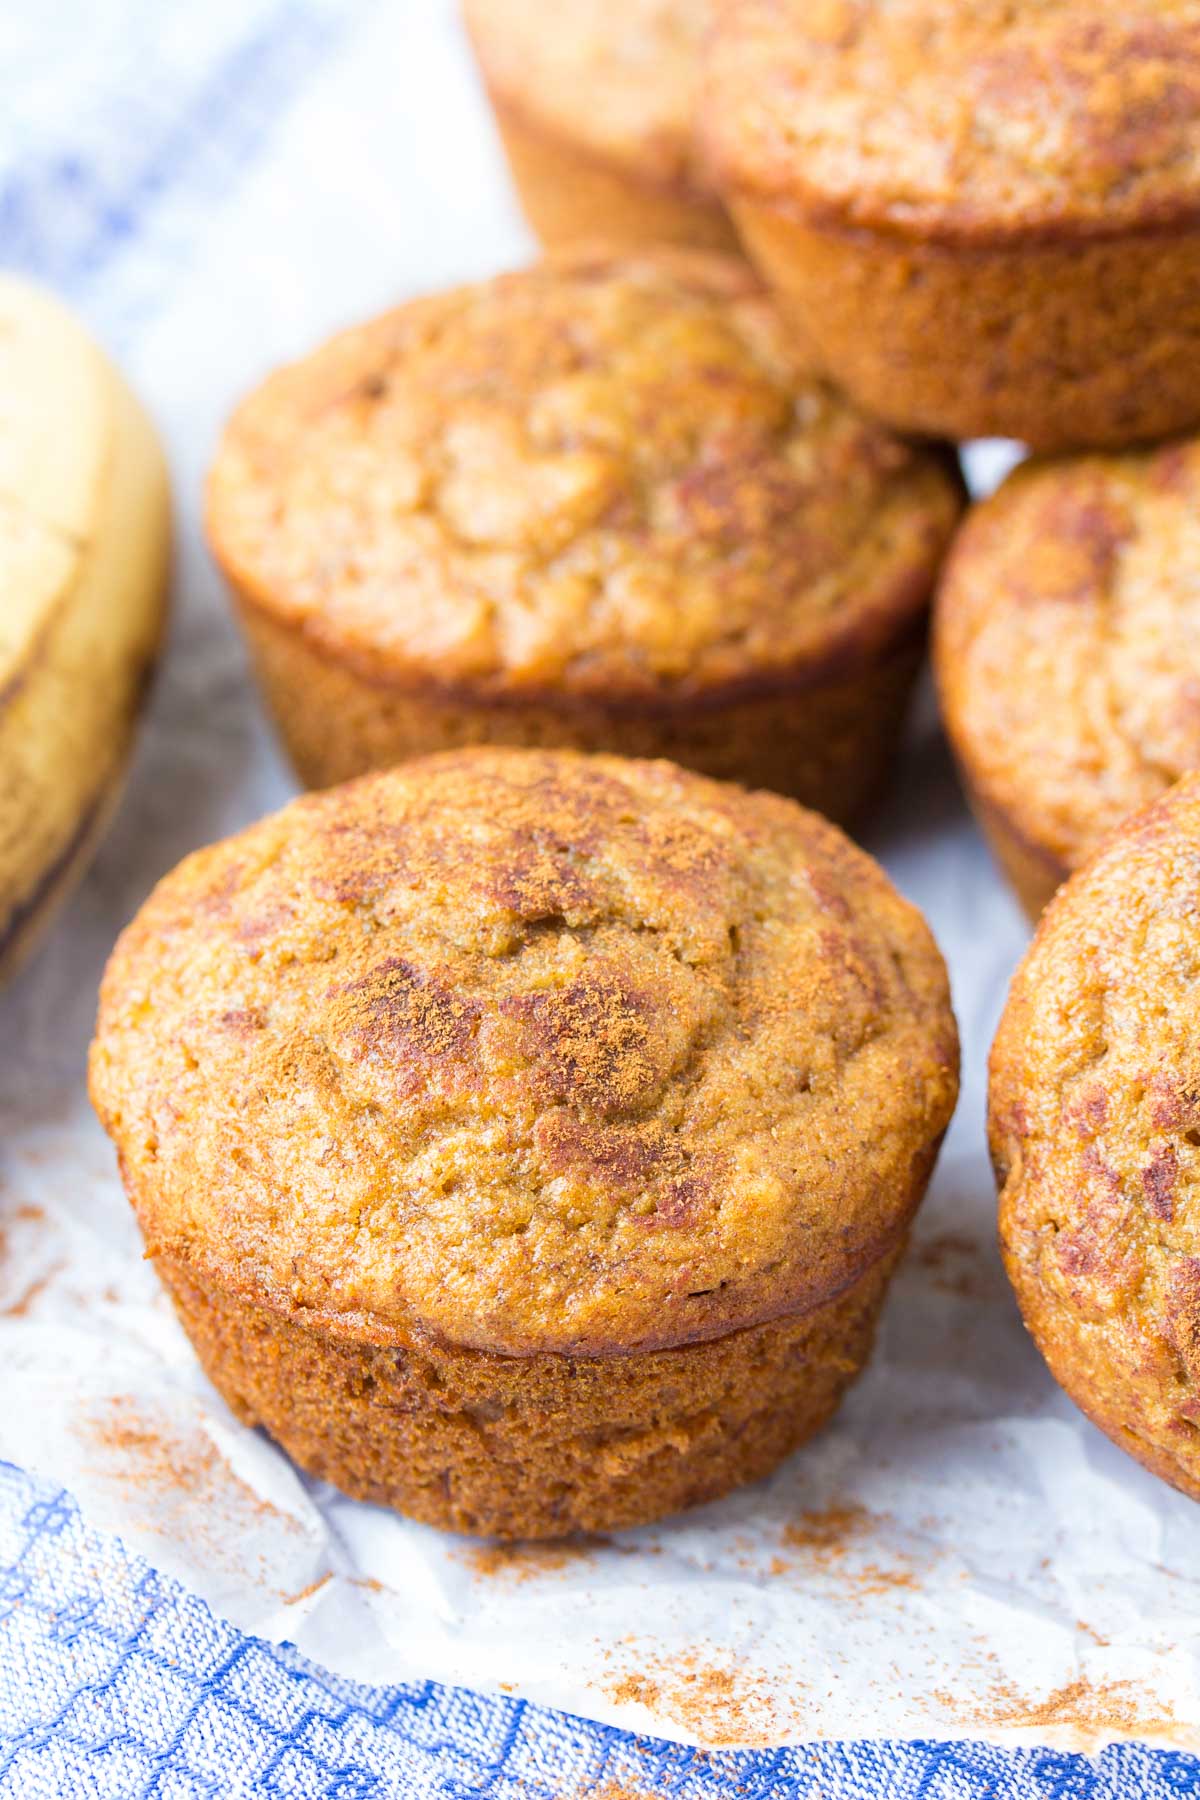 Muffins Recipe Step By Step